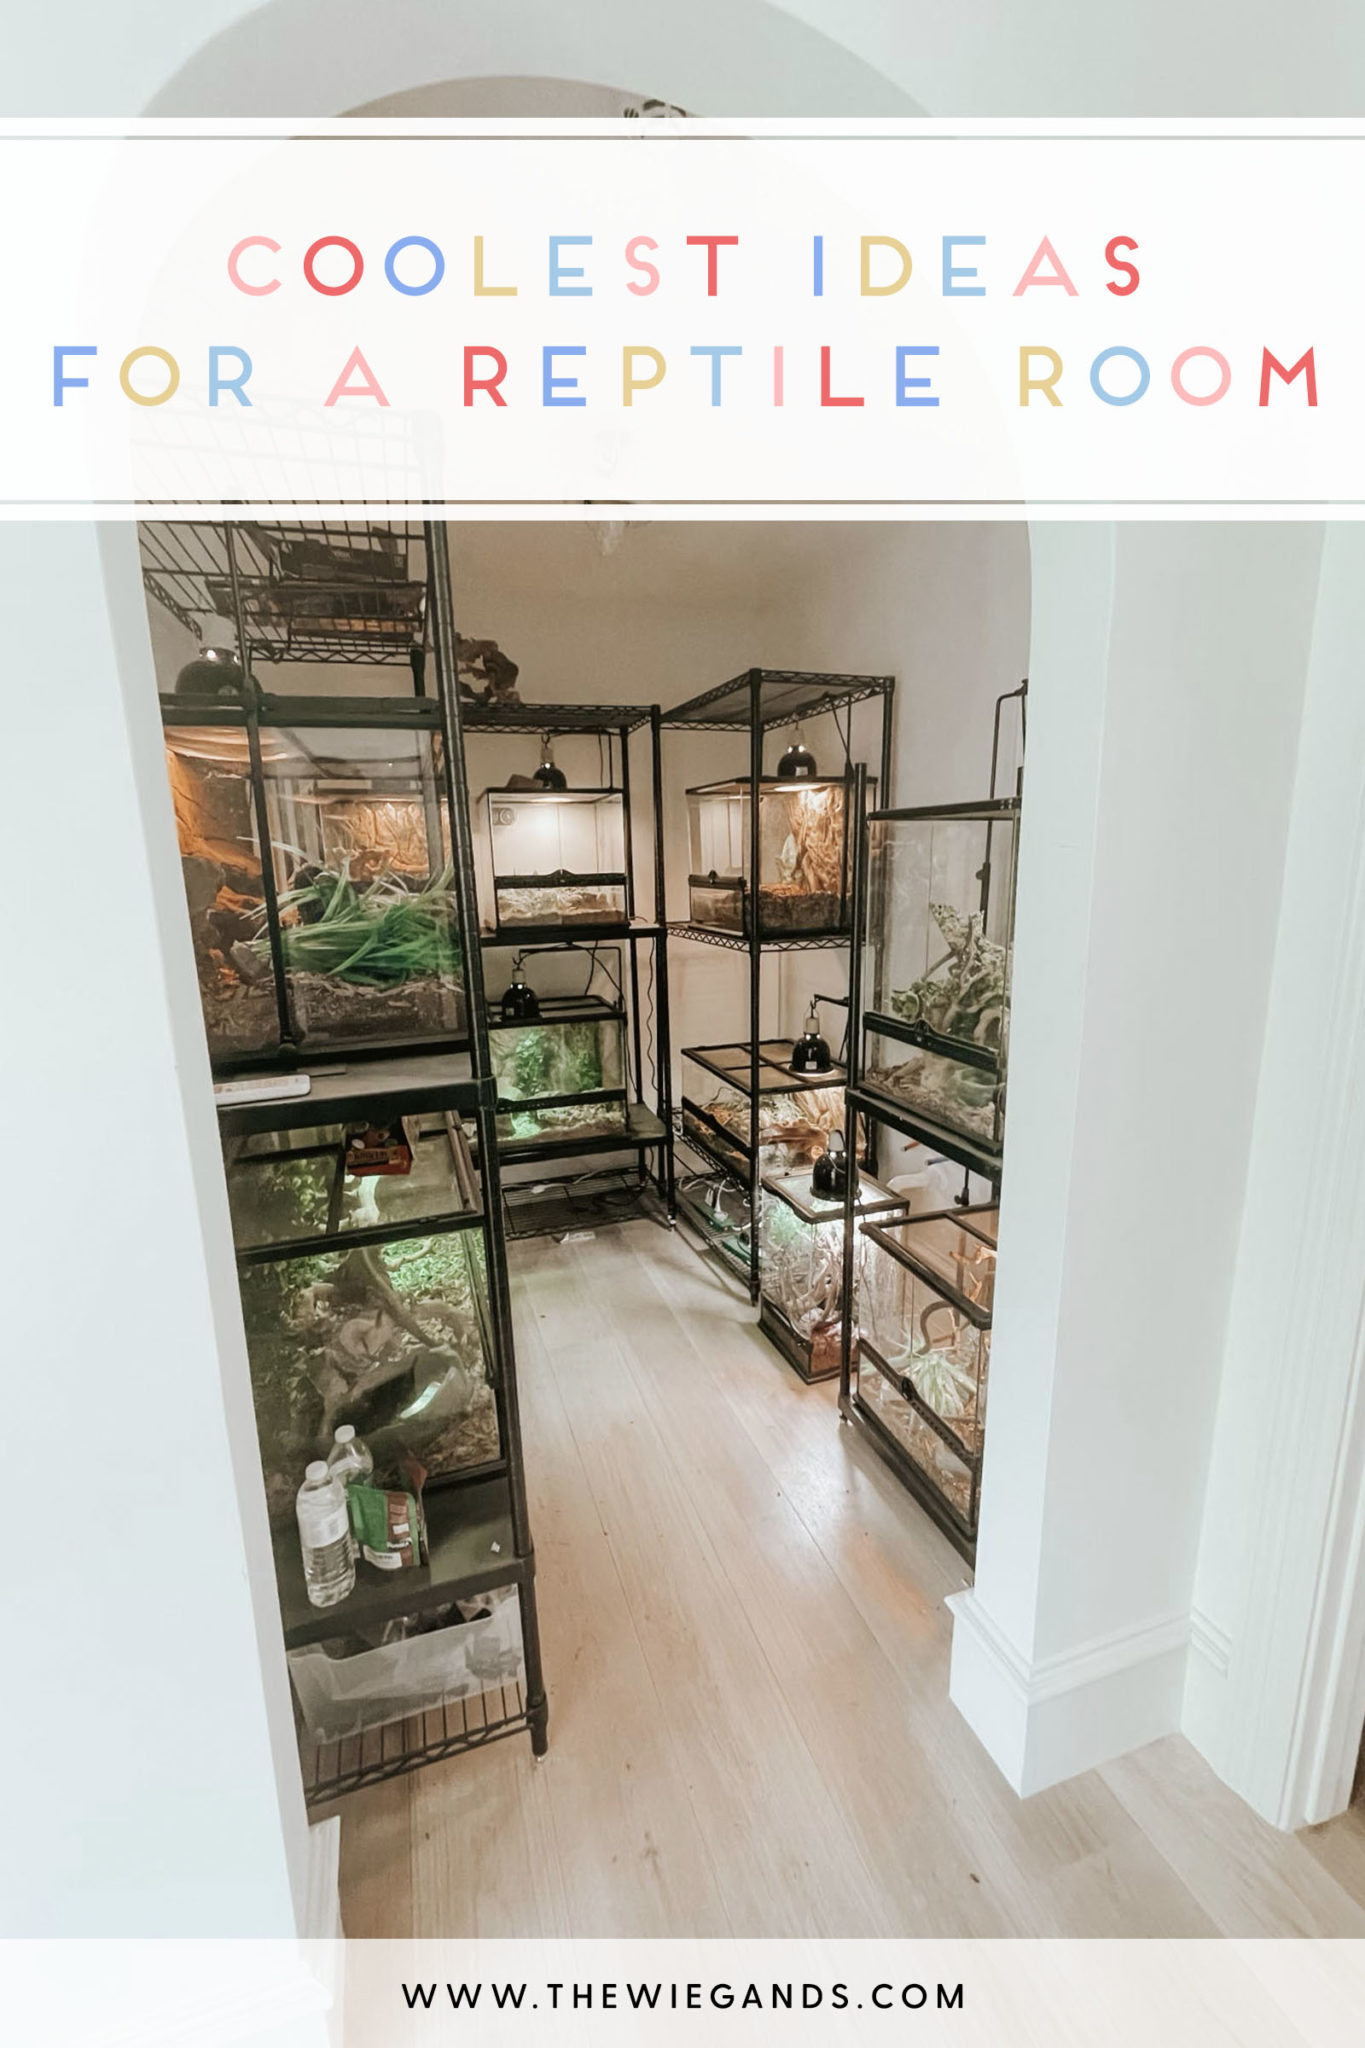 the reptile room 1999